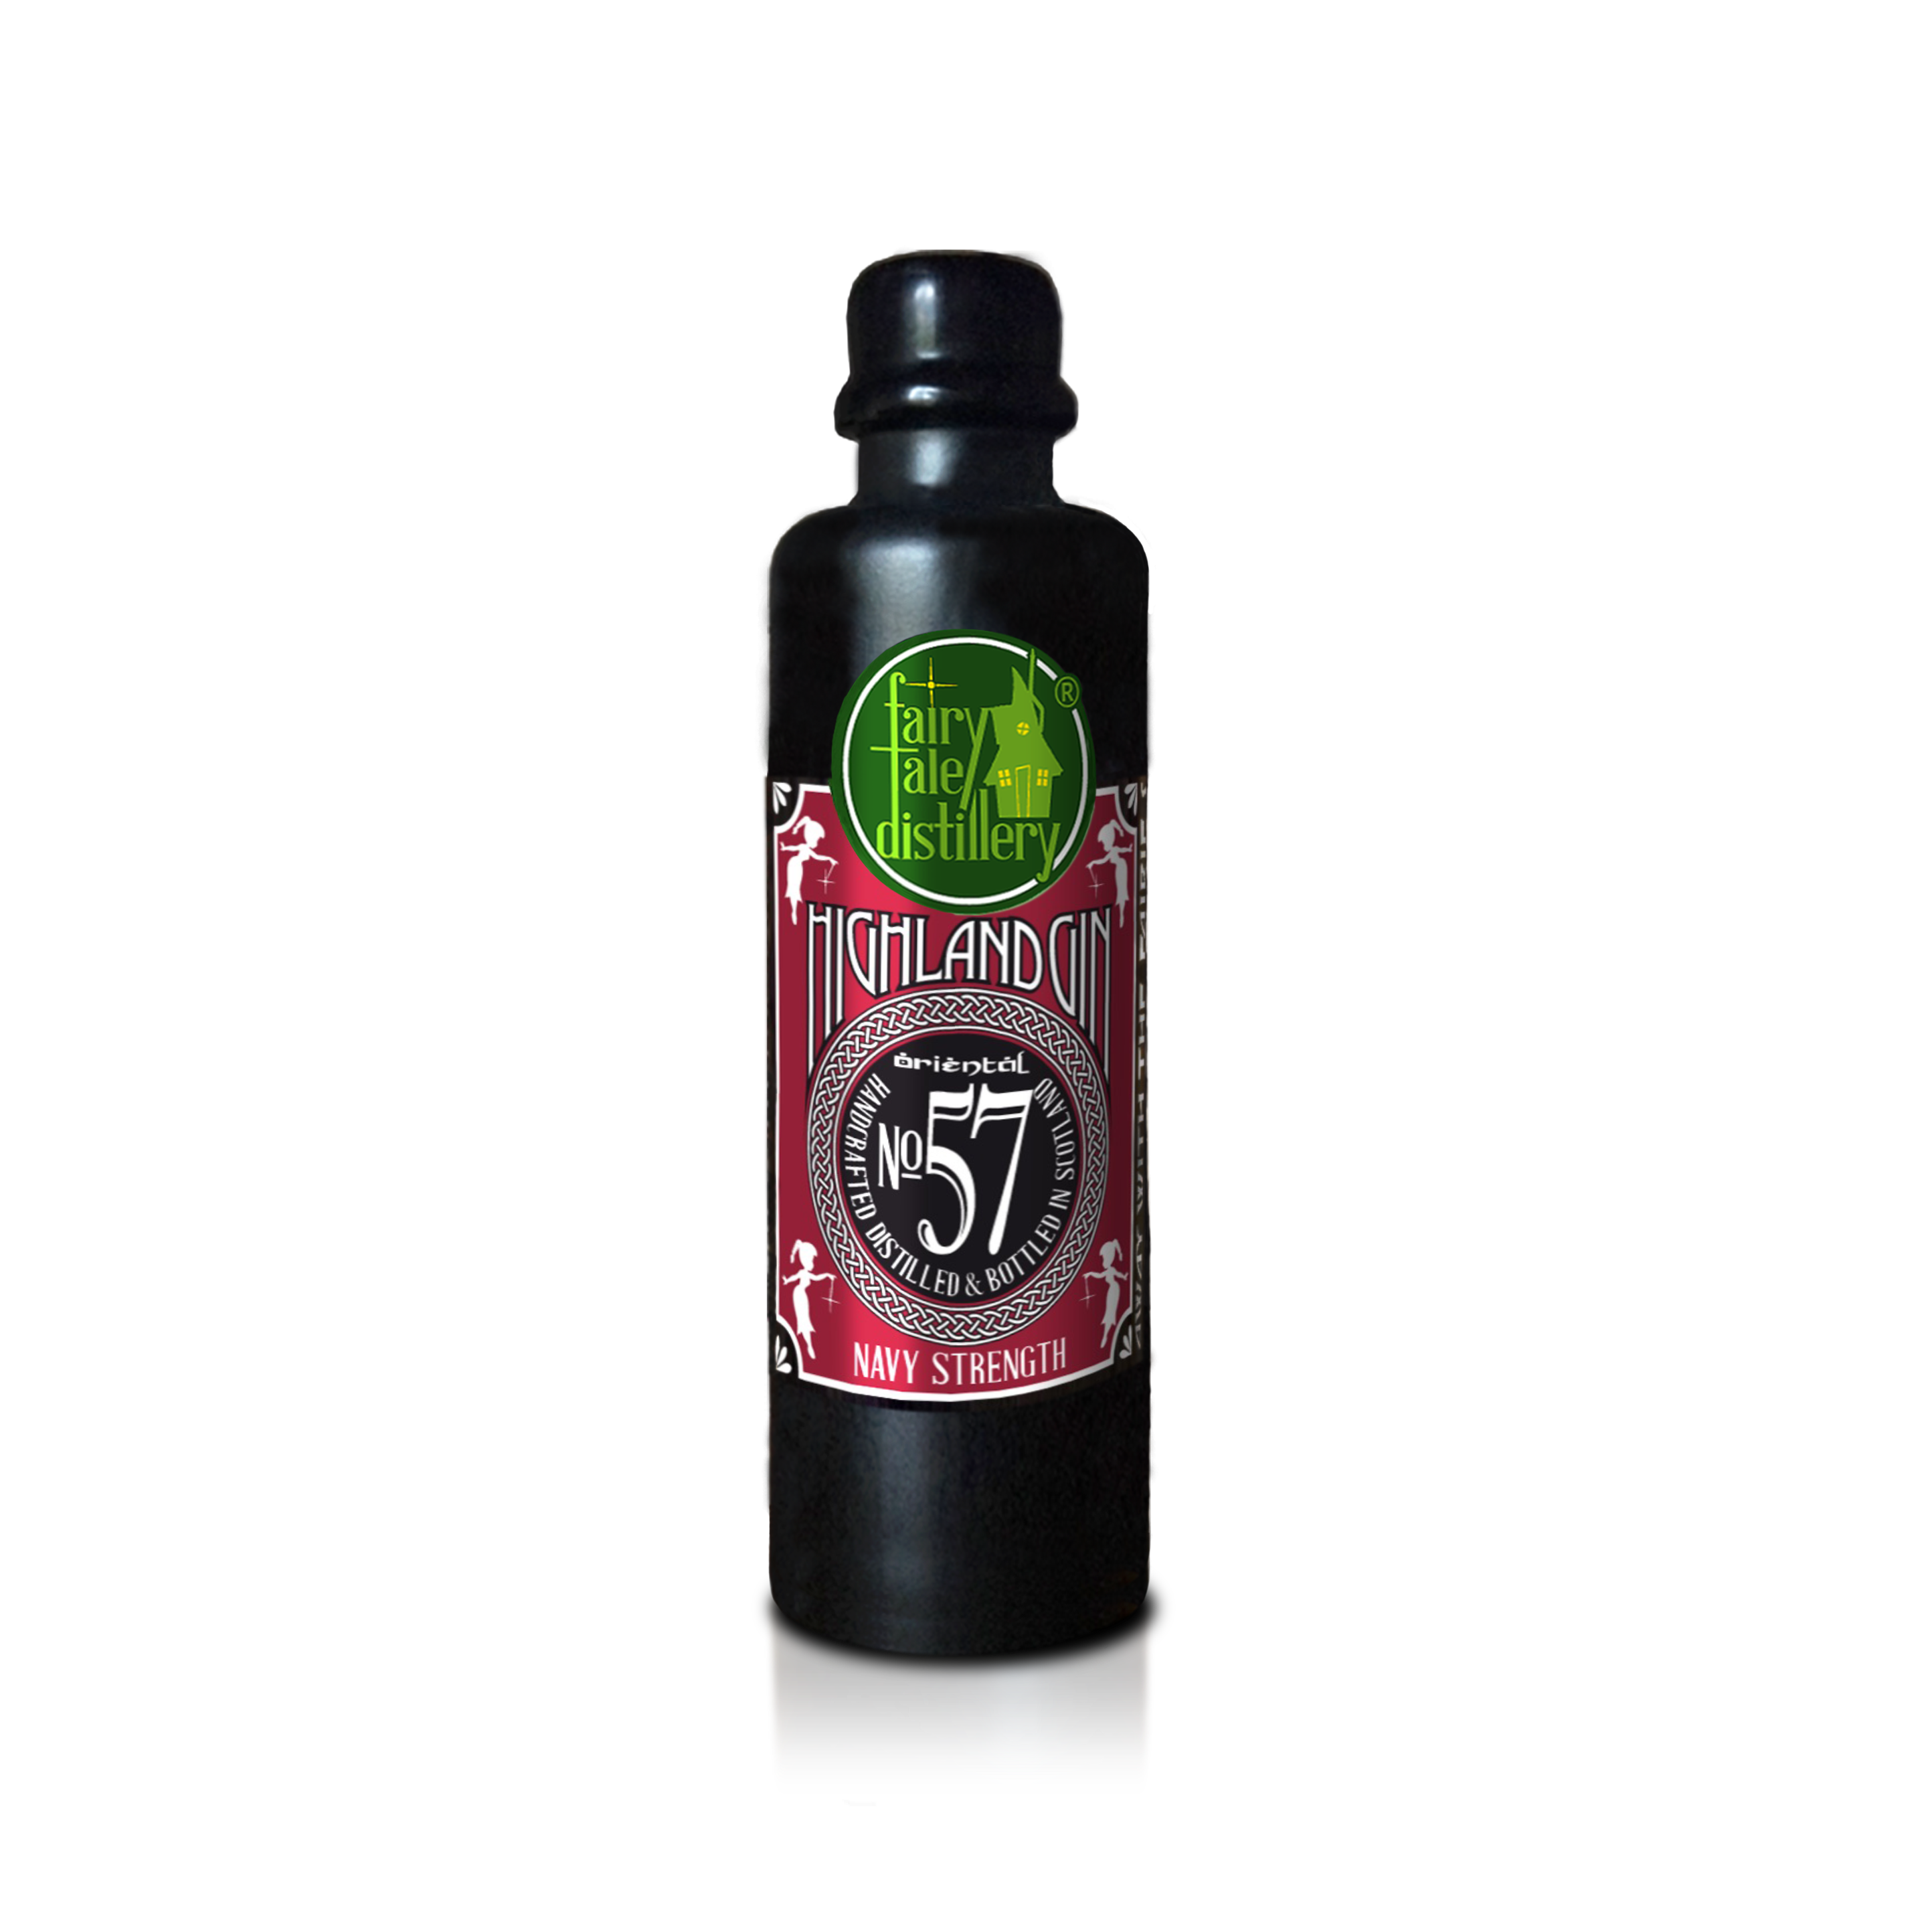 No 57 Oriental Navy Strength Highland Gin bottle 0,2l from Fairytale Distillery